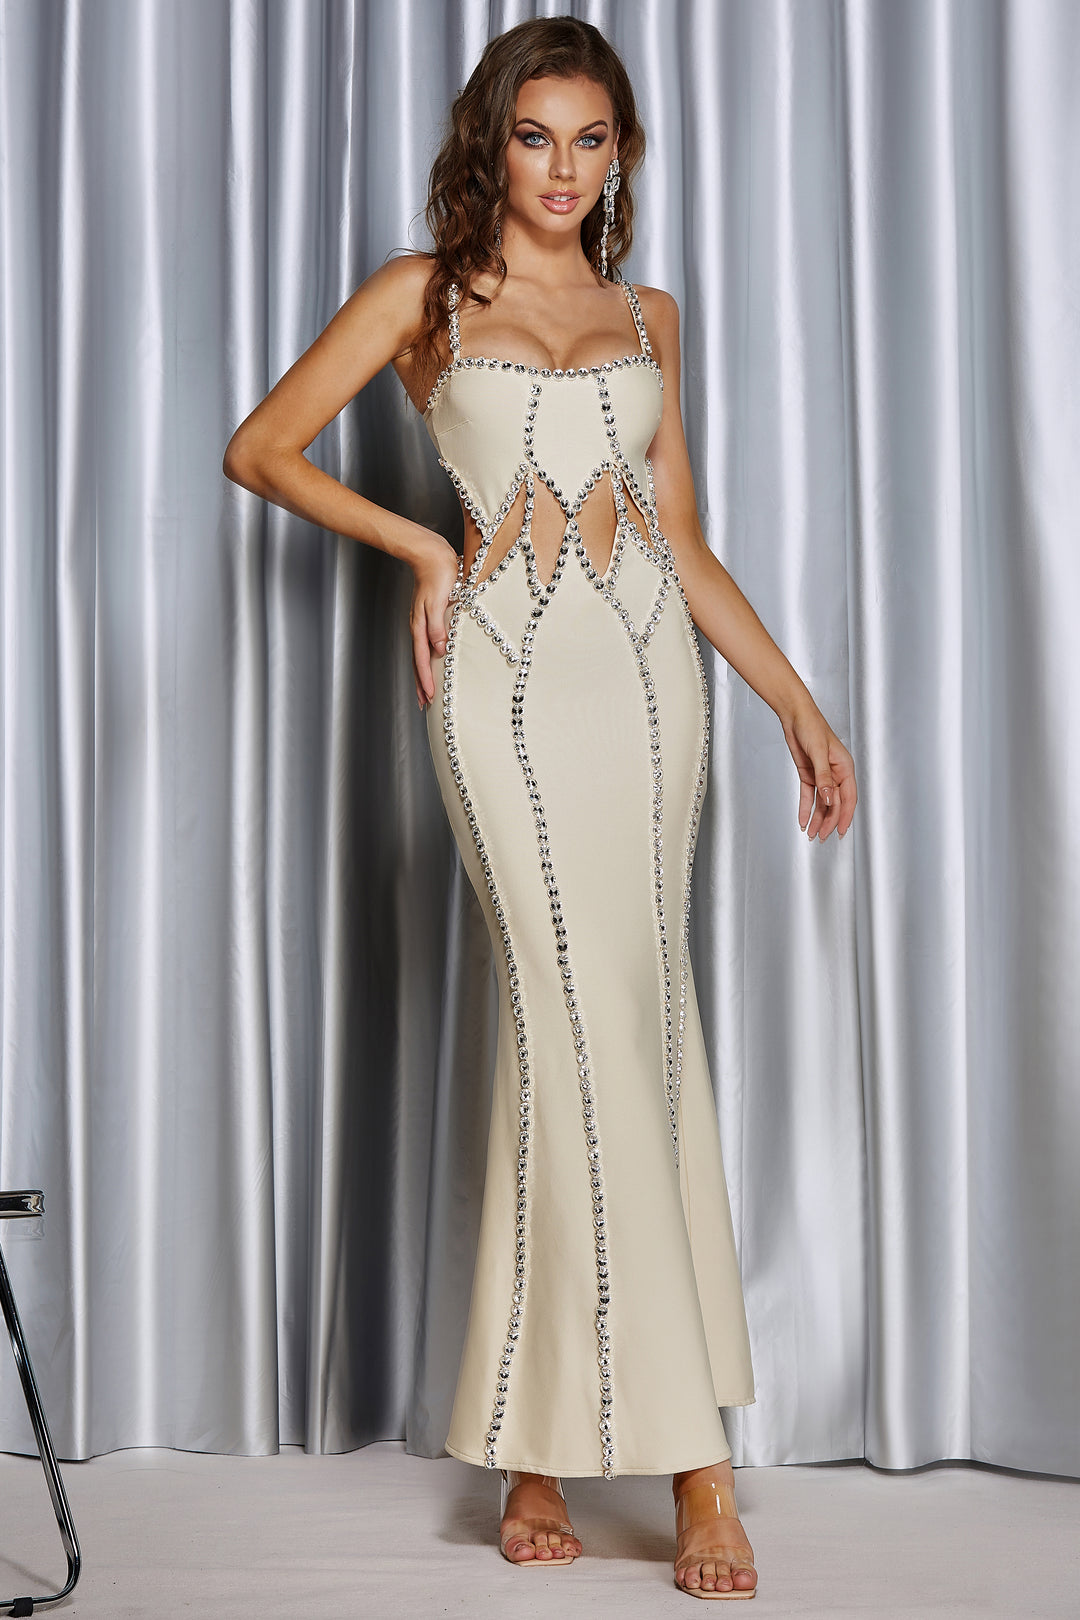 Sesidy-Calliope Hollow Mermaid Dress-Women's Clothing Online Store